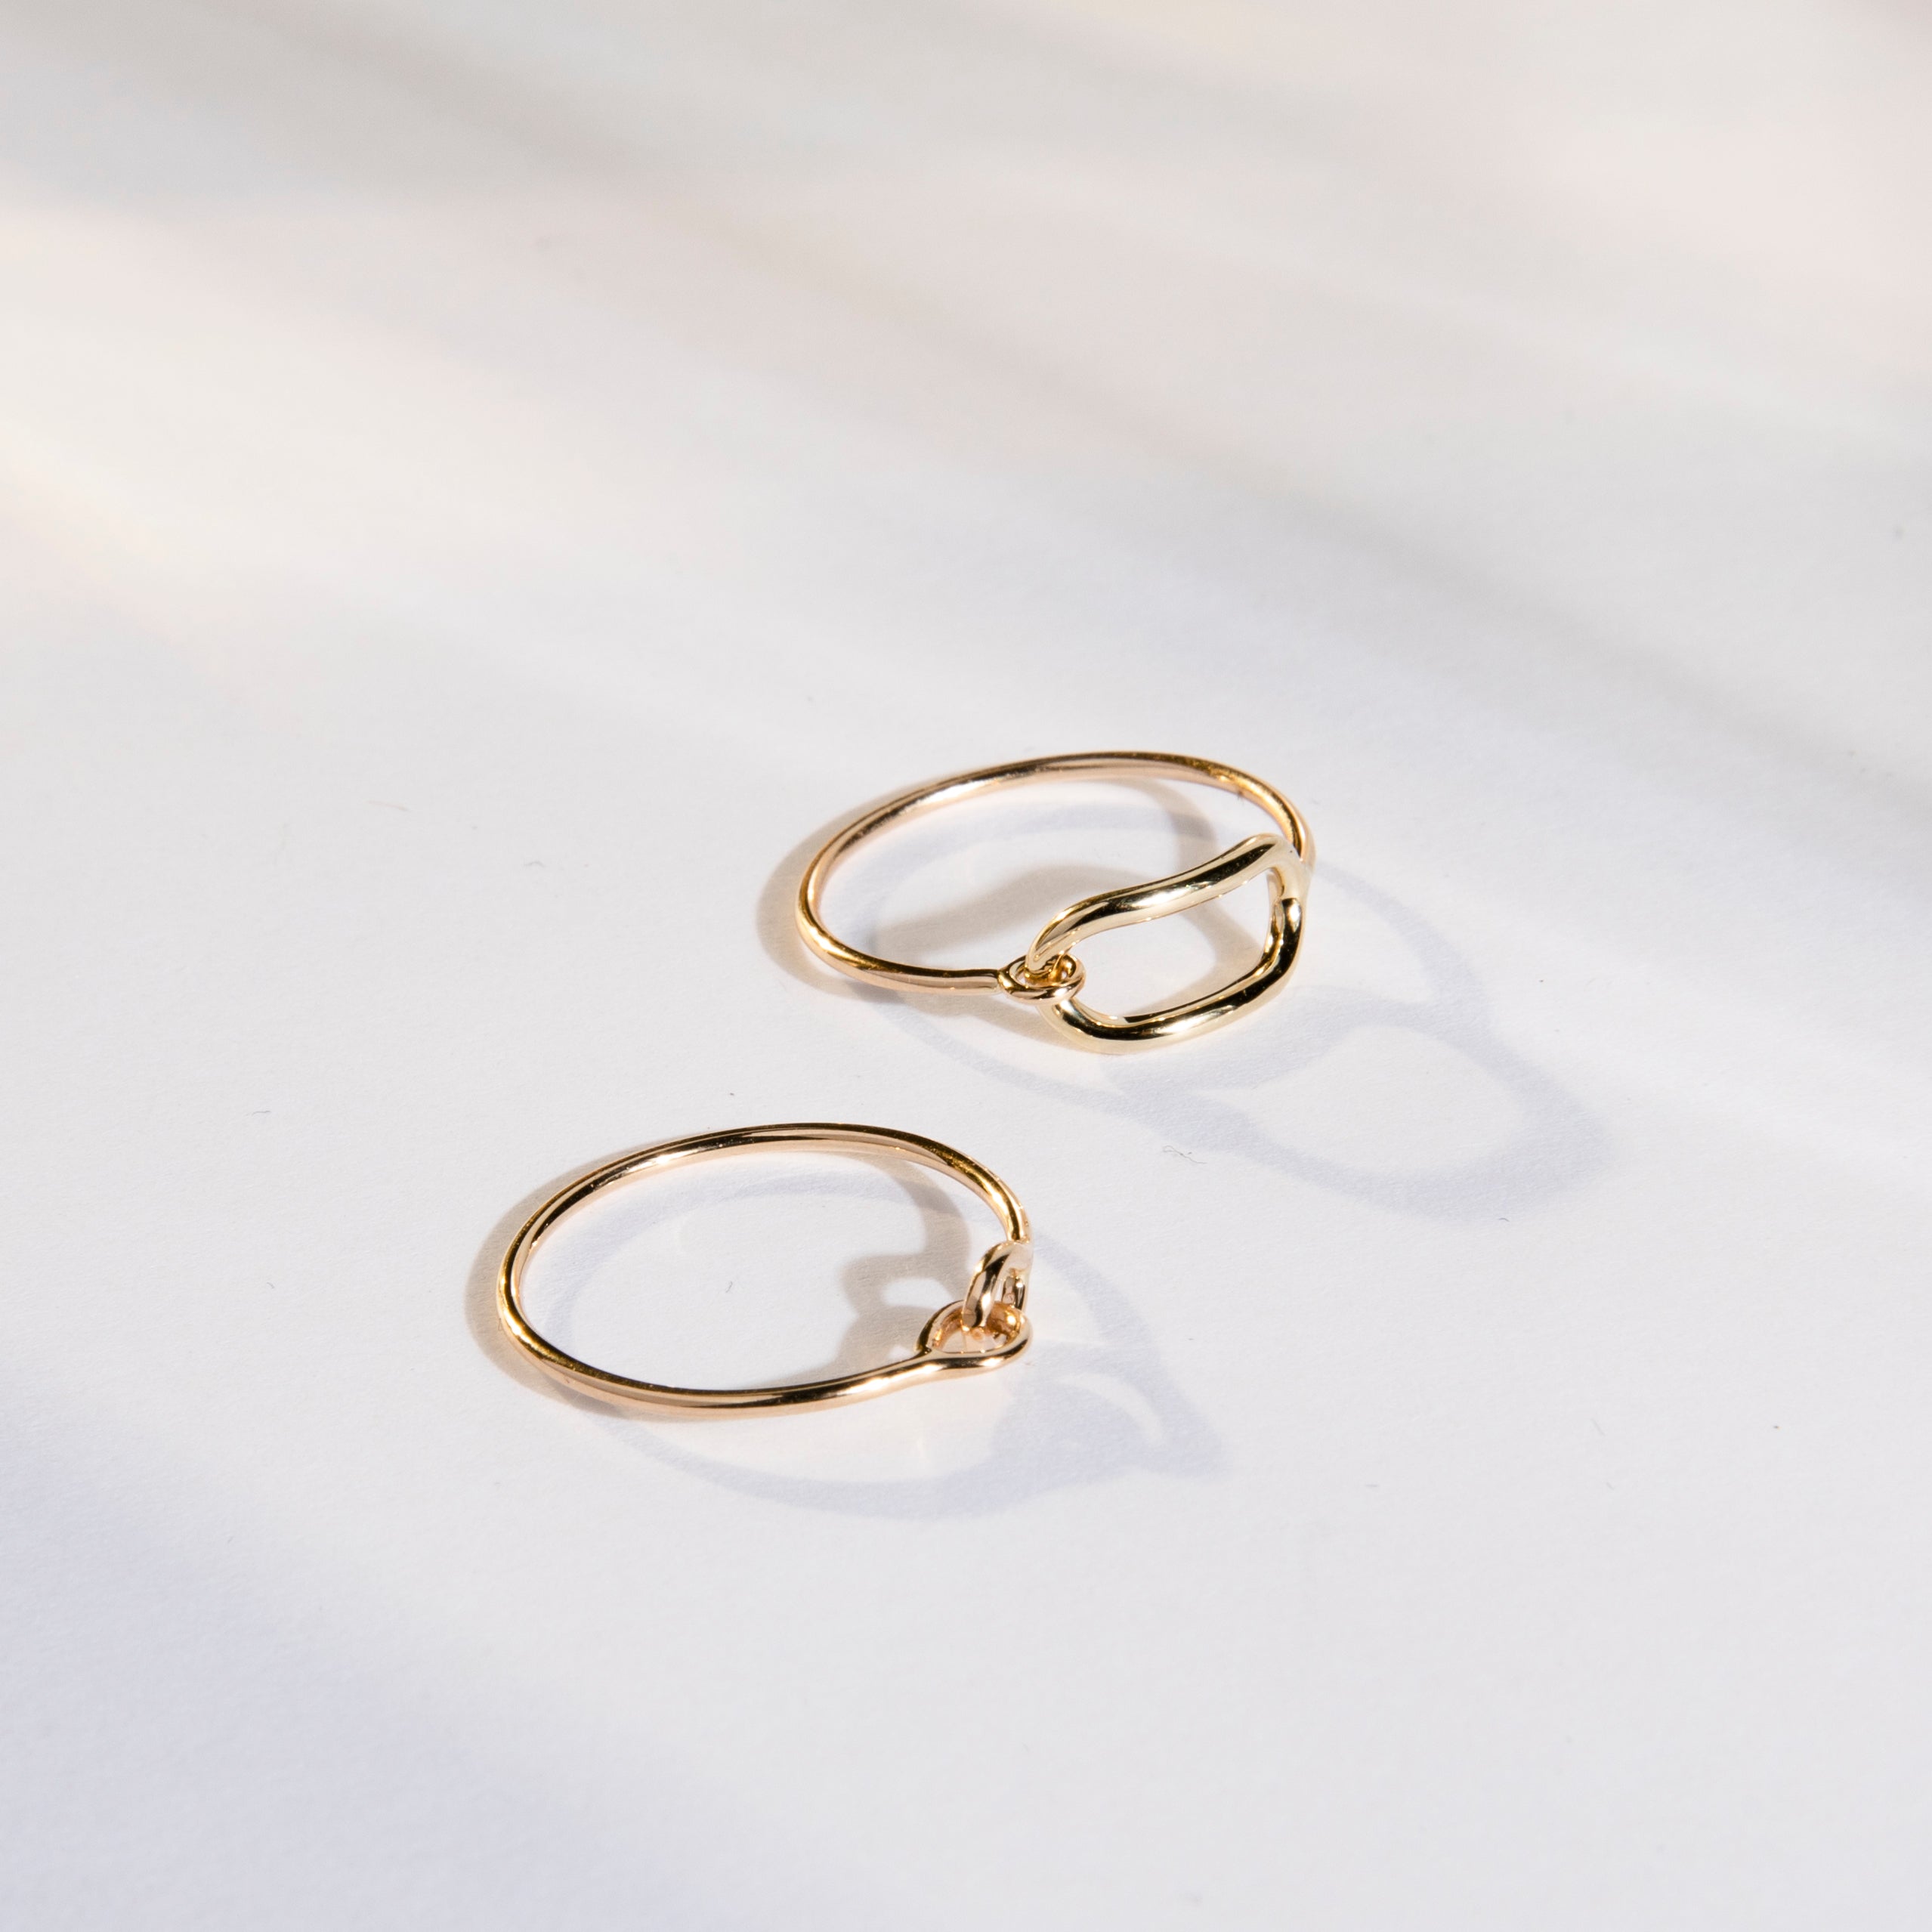 Yra Alternative Ring in 14k Gold By SHW Fine Jewelry NYC